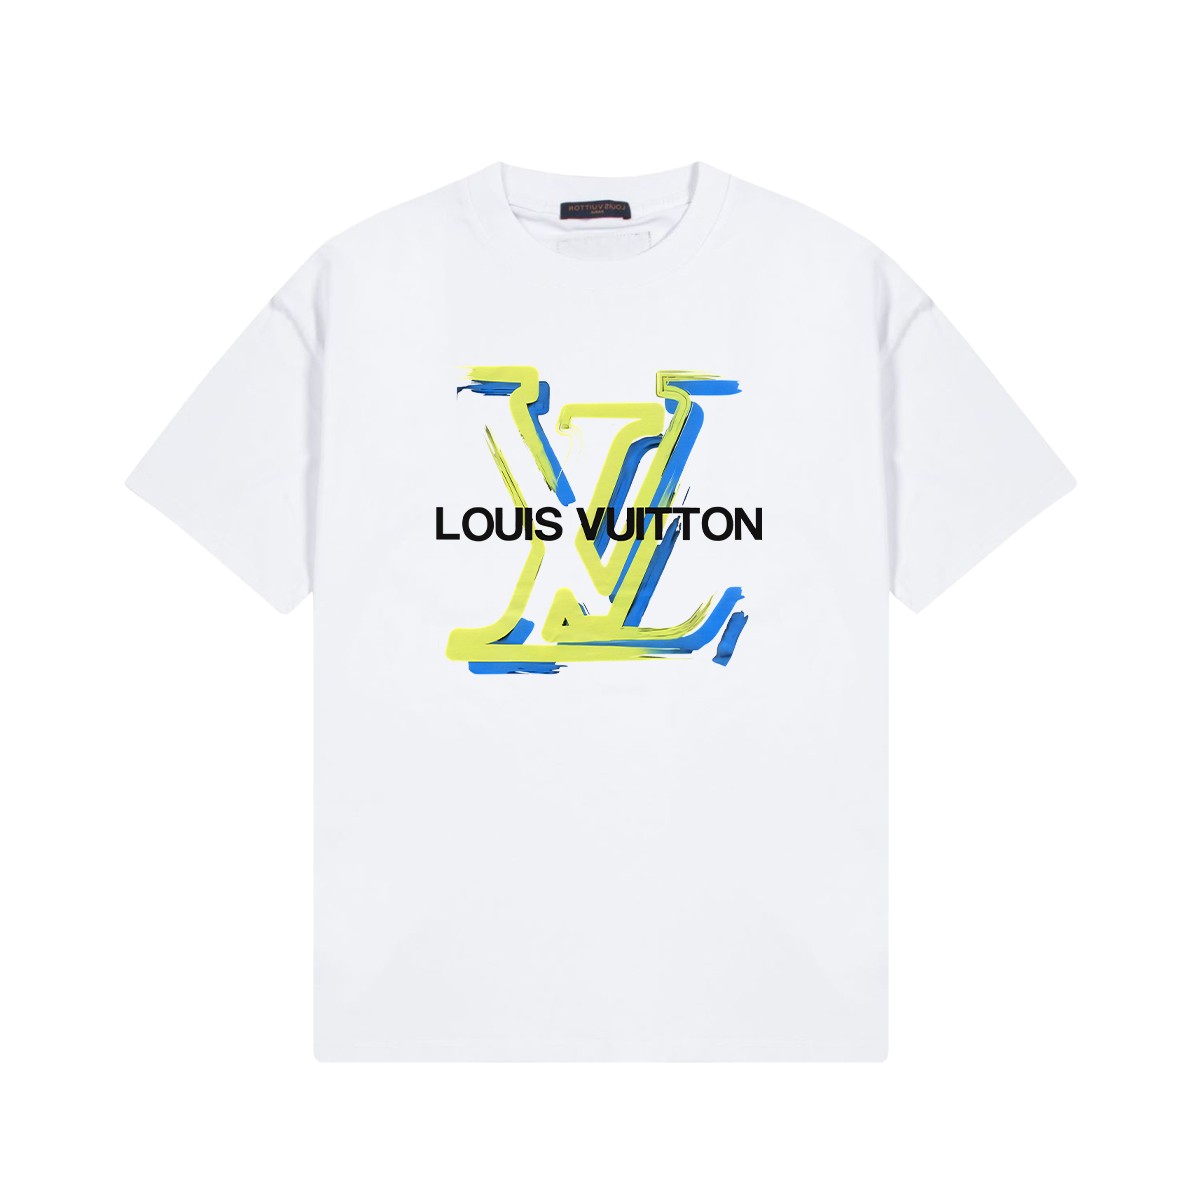 Louis Vuitton Clothing T-Shirt Black Doodle White Printing Unisex Combed Cotton Fashion Sweatpants